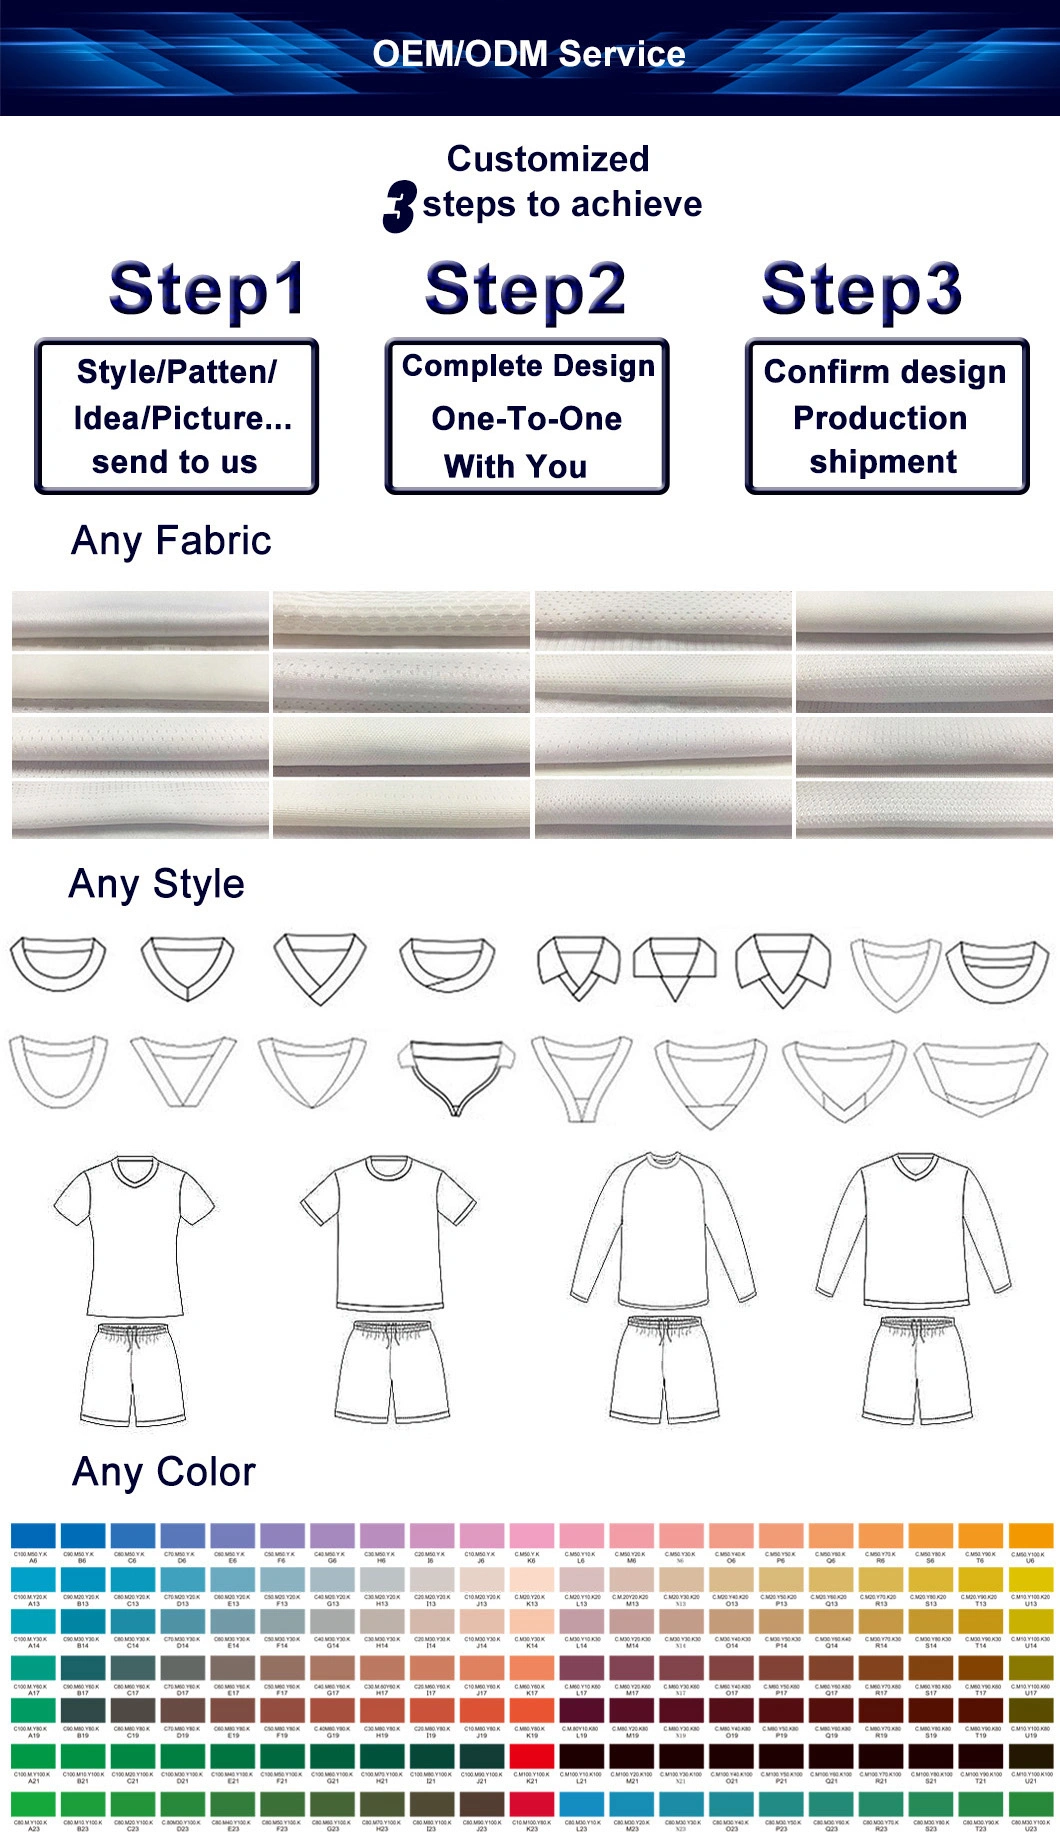 Sportswear Custom Sublimation Printing Reversible Baketball Training Vest Uniform